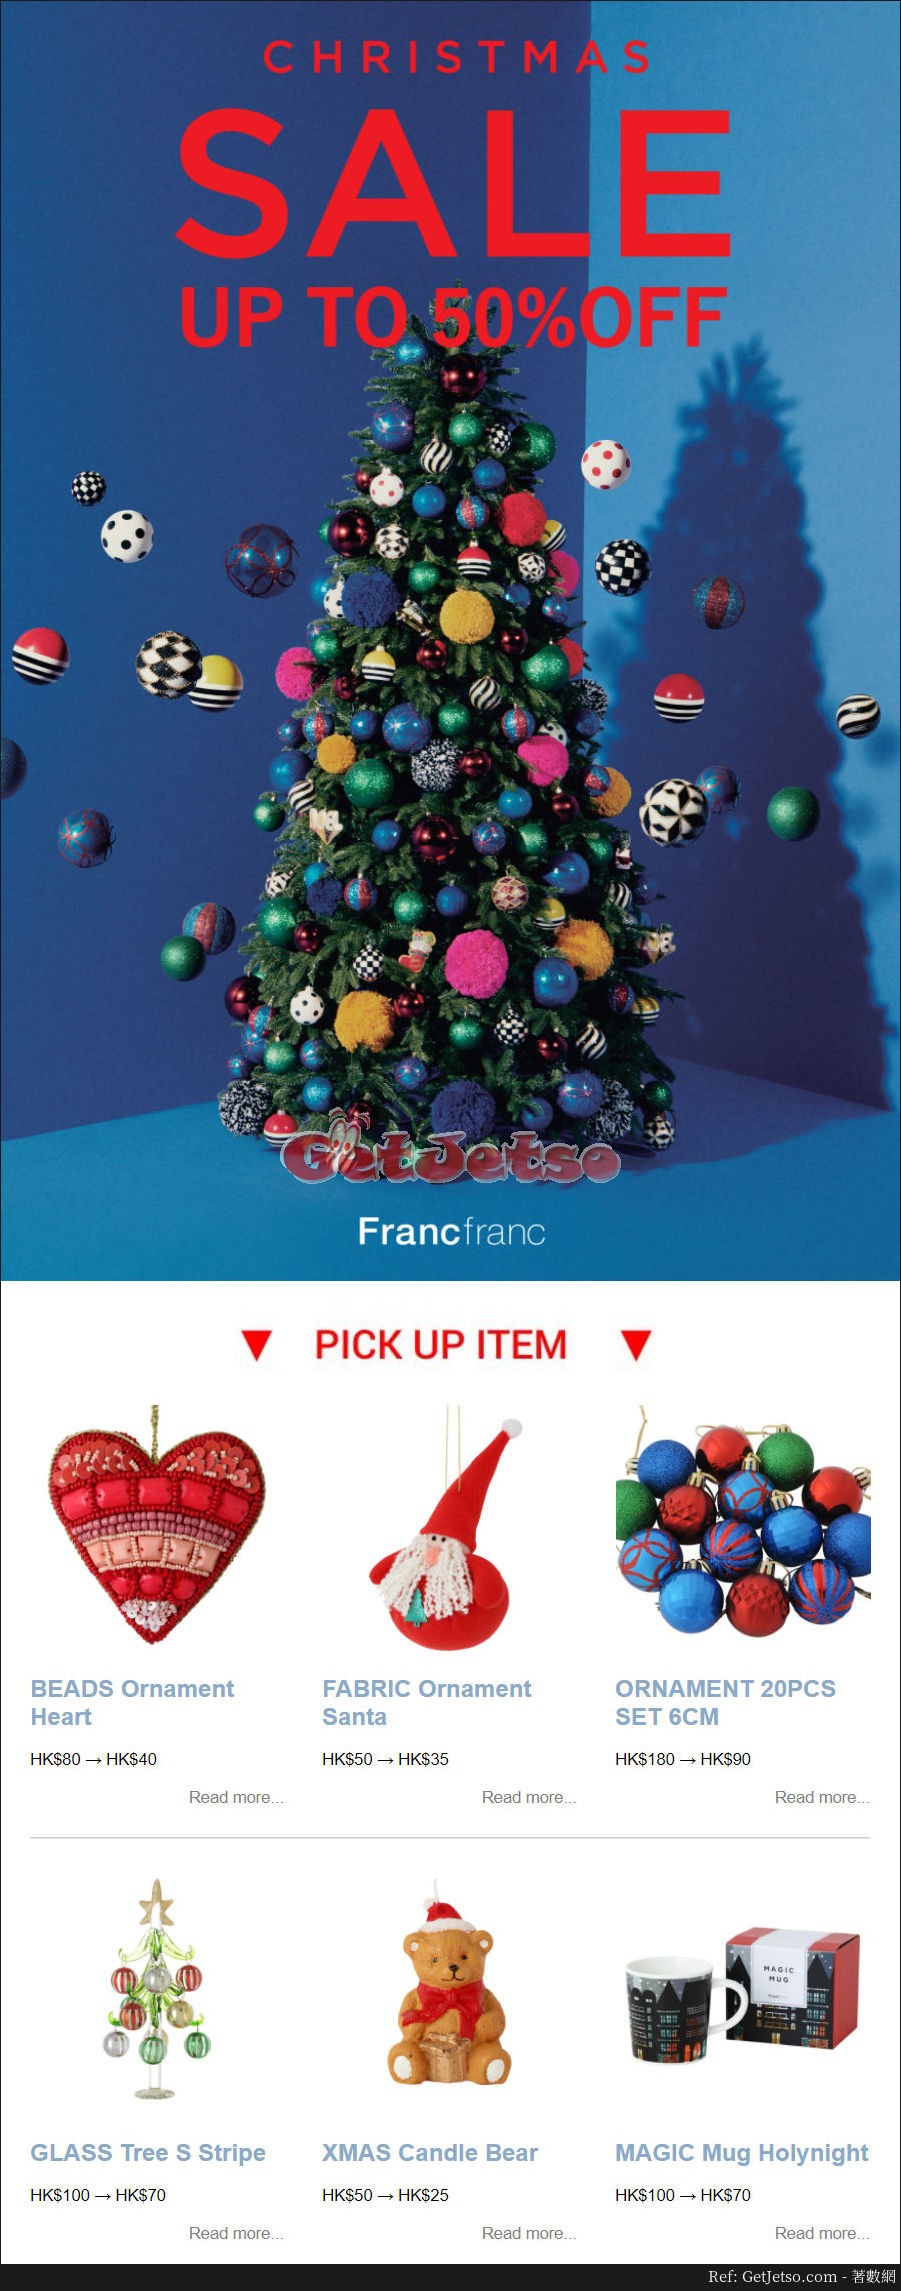 Francfranc 聖誕購物優惠(17年12月1日起)圖片1